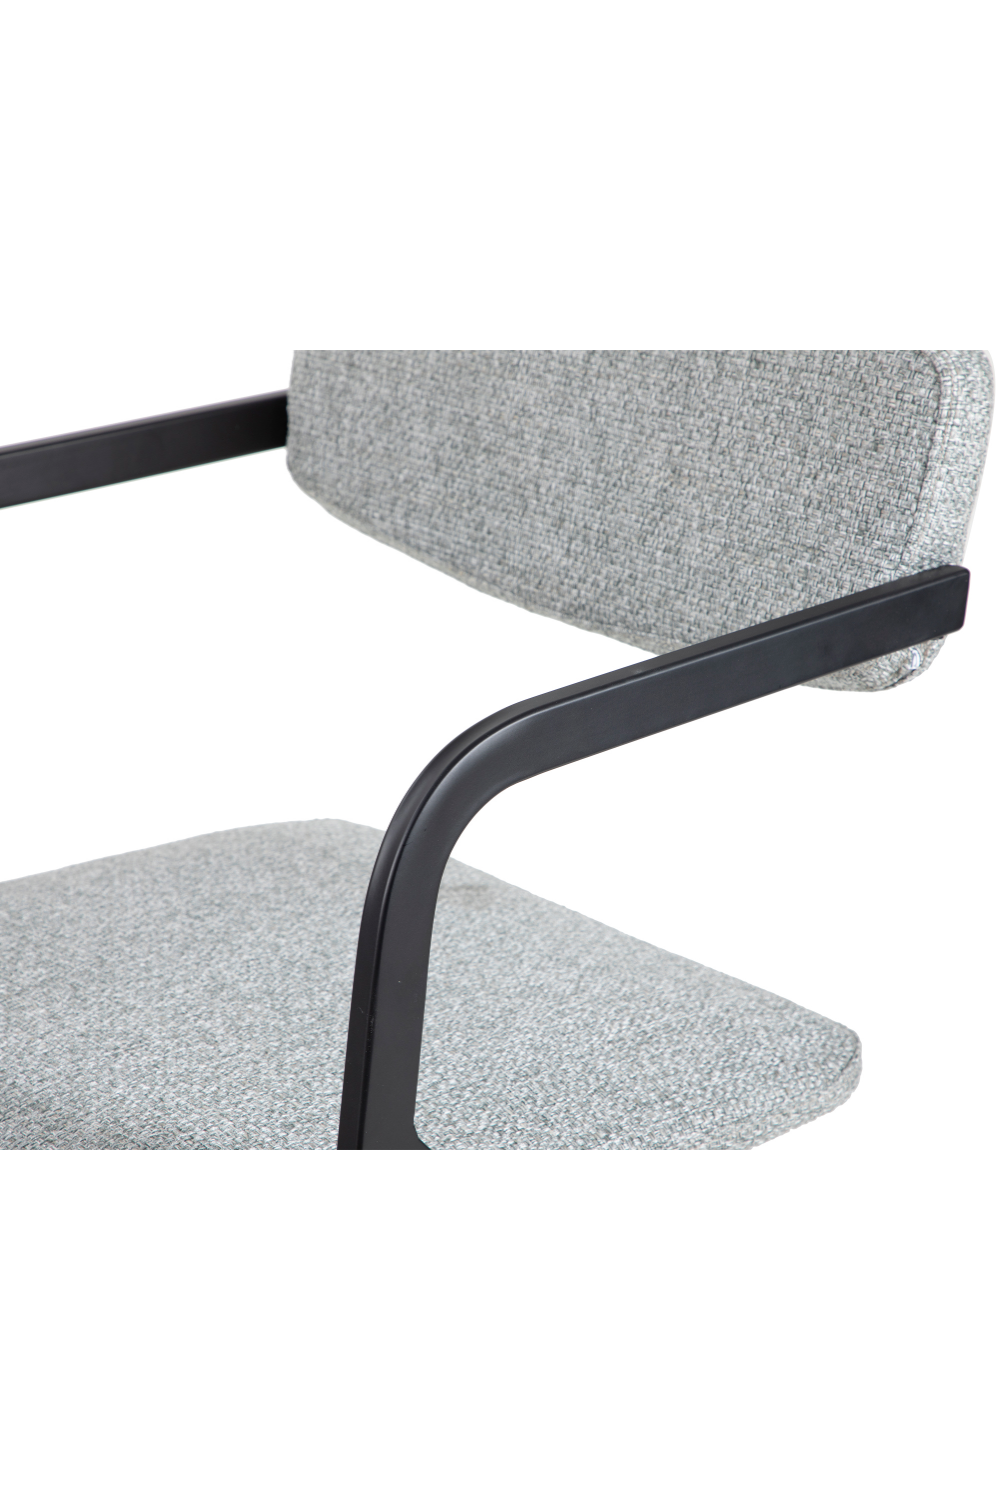 Gray Upholstered Dining Chair | Liang & Eimil Alpar | Oroa.com